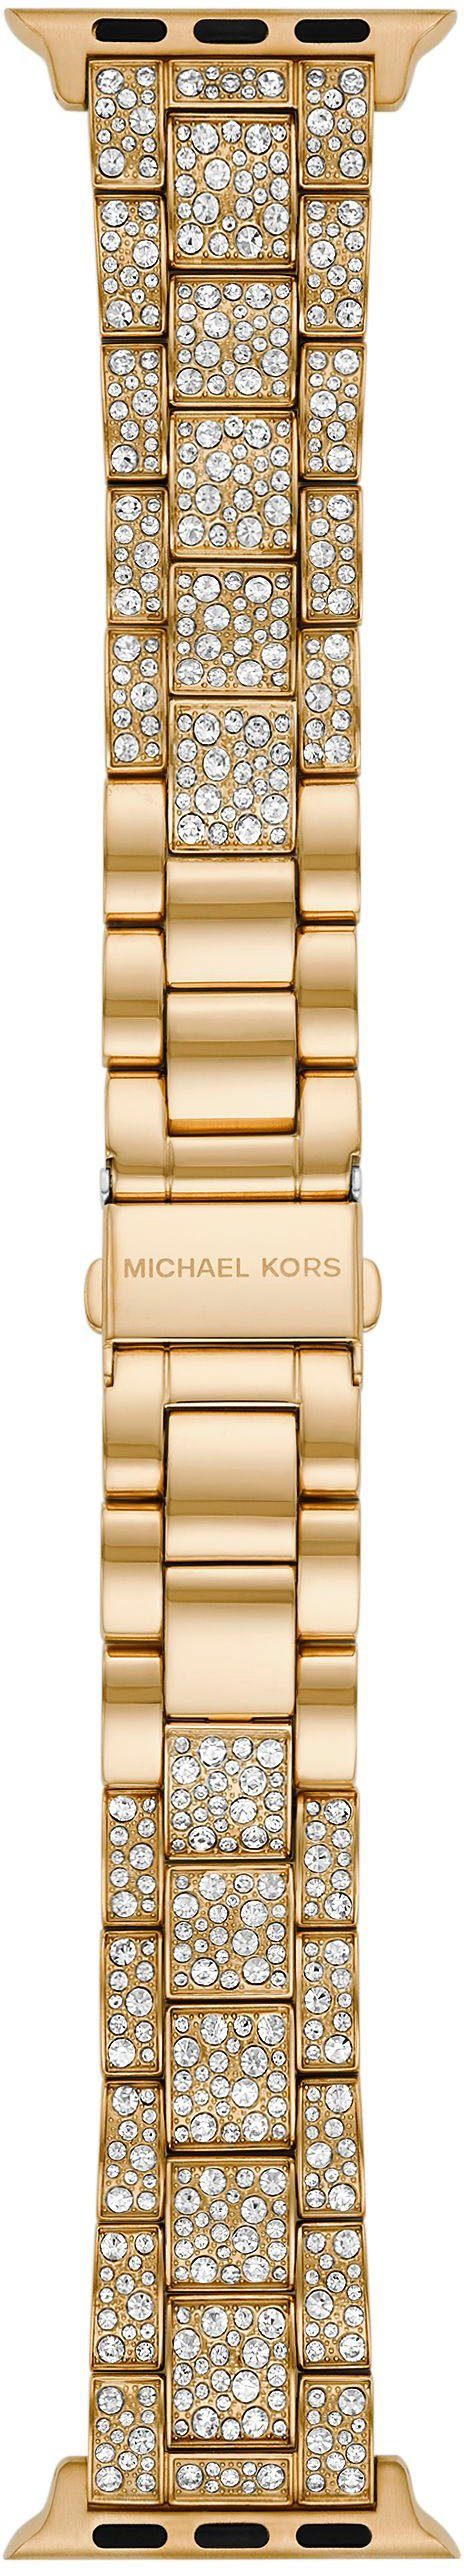 MICHAEL KORS Smartwatch-Armband Band for Apple Watch, MKS8041, Geschenkset, Wechselarmband, Ersatzarmband für Damen & Herren, unisex